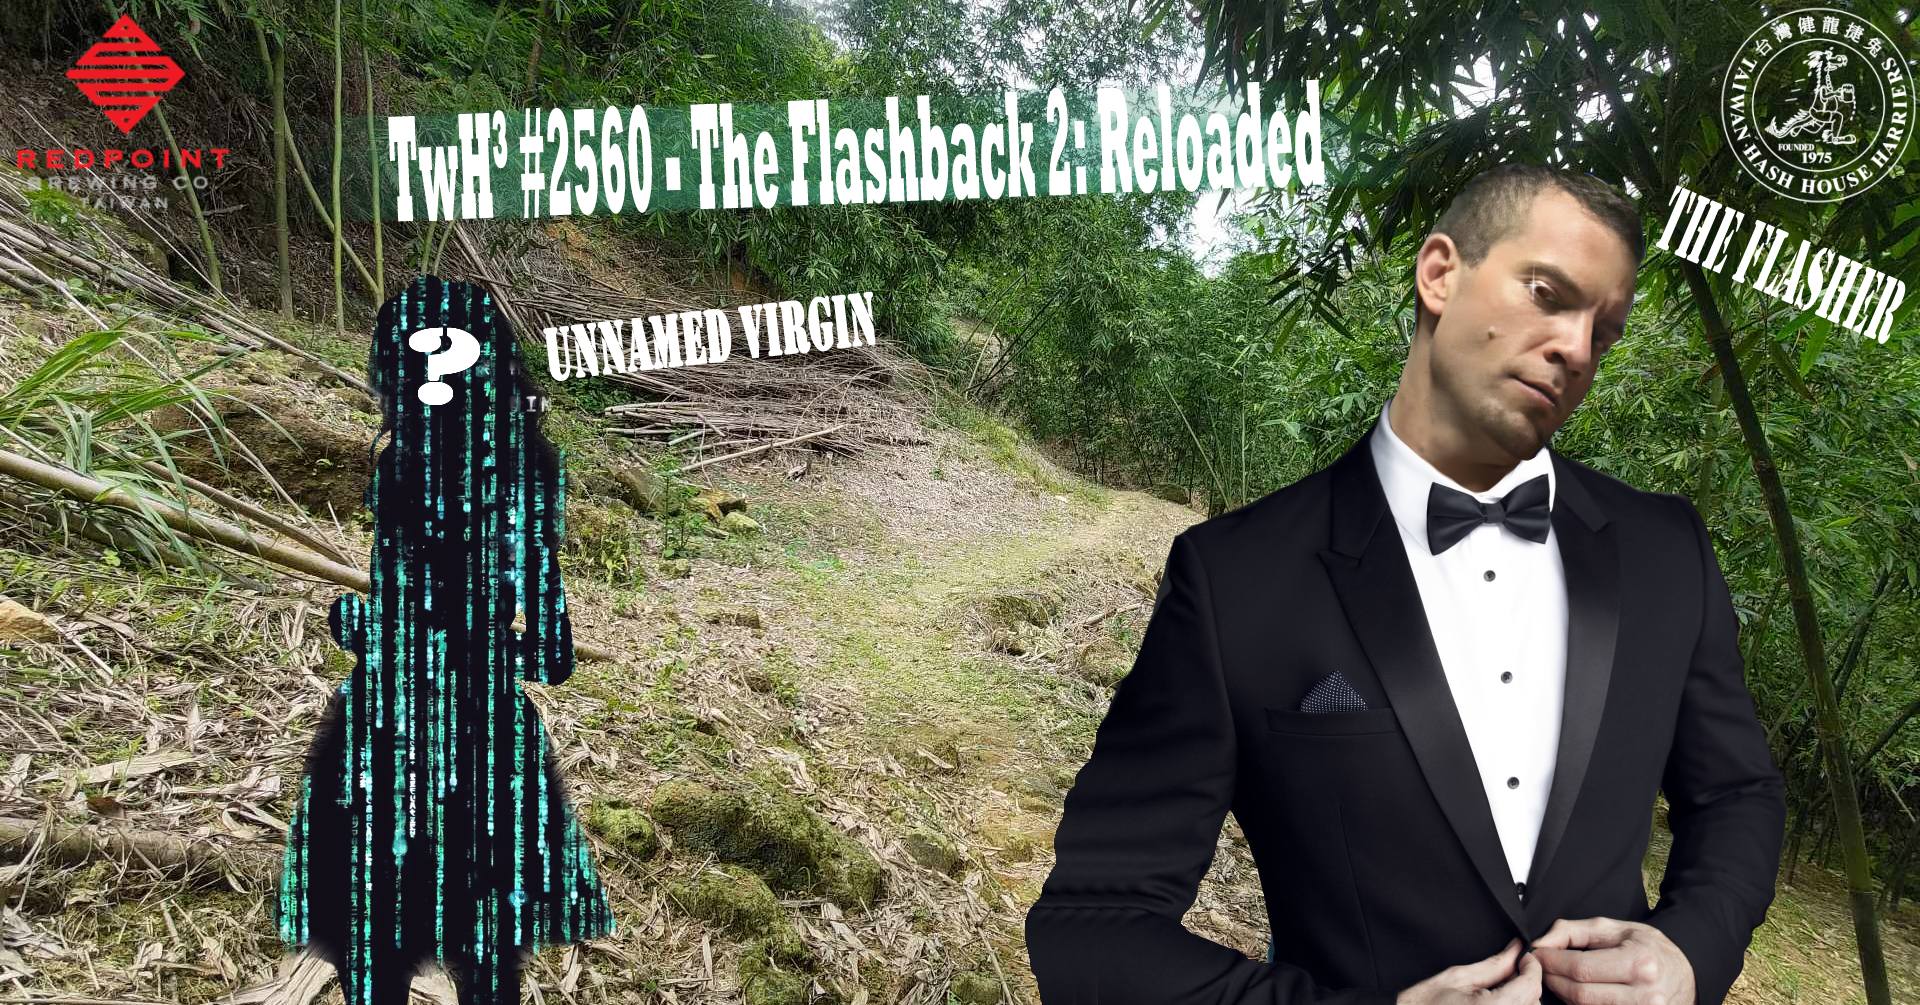 #2560 - The Flashback 2: Reloaded